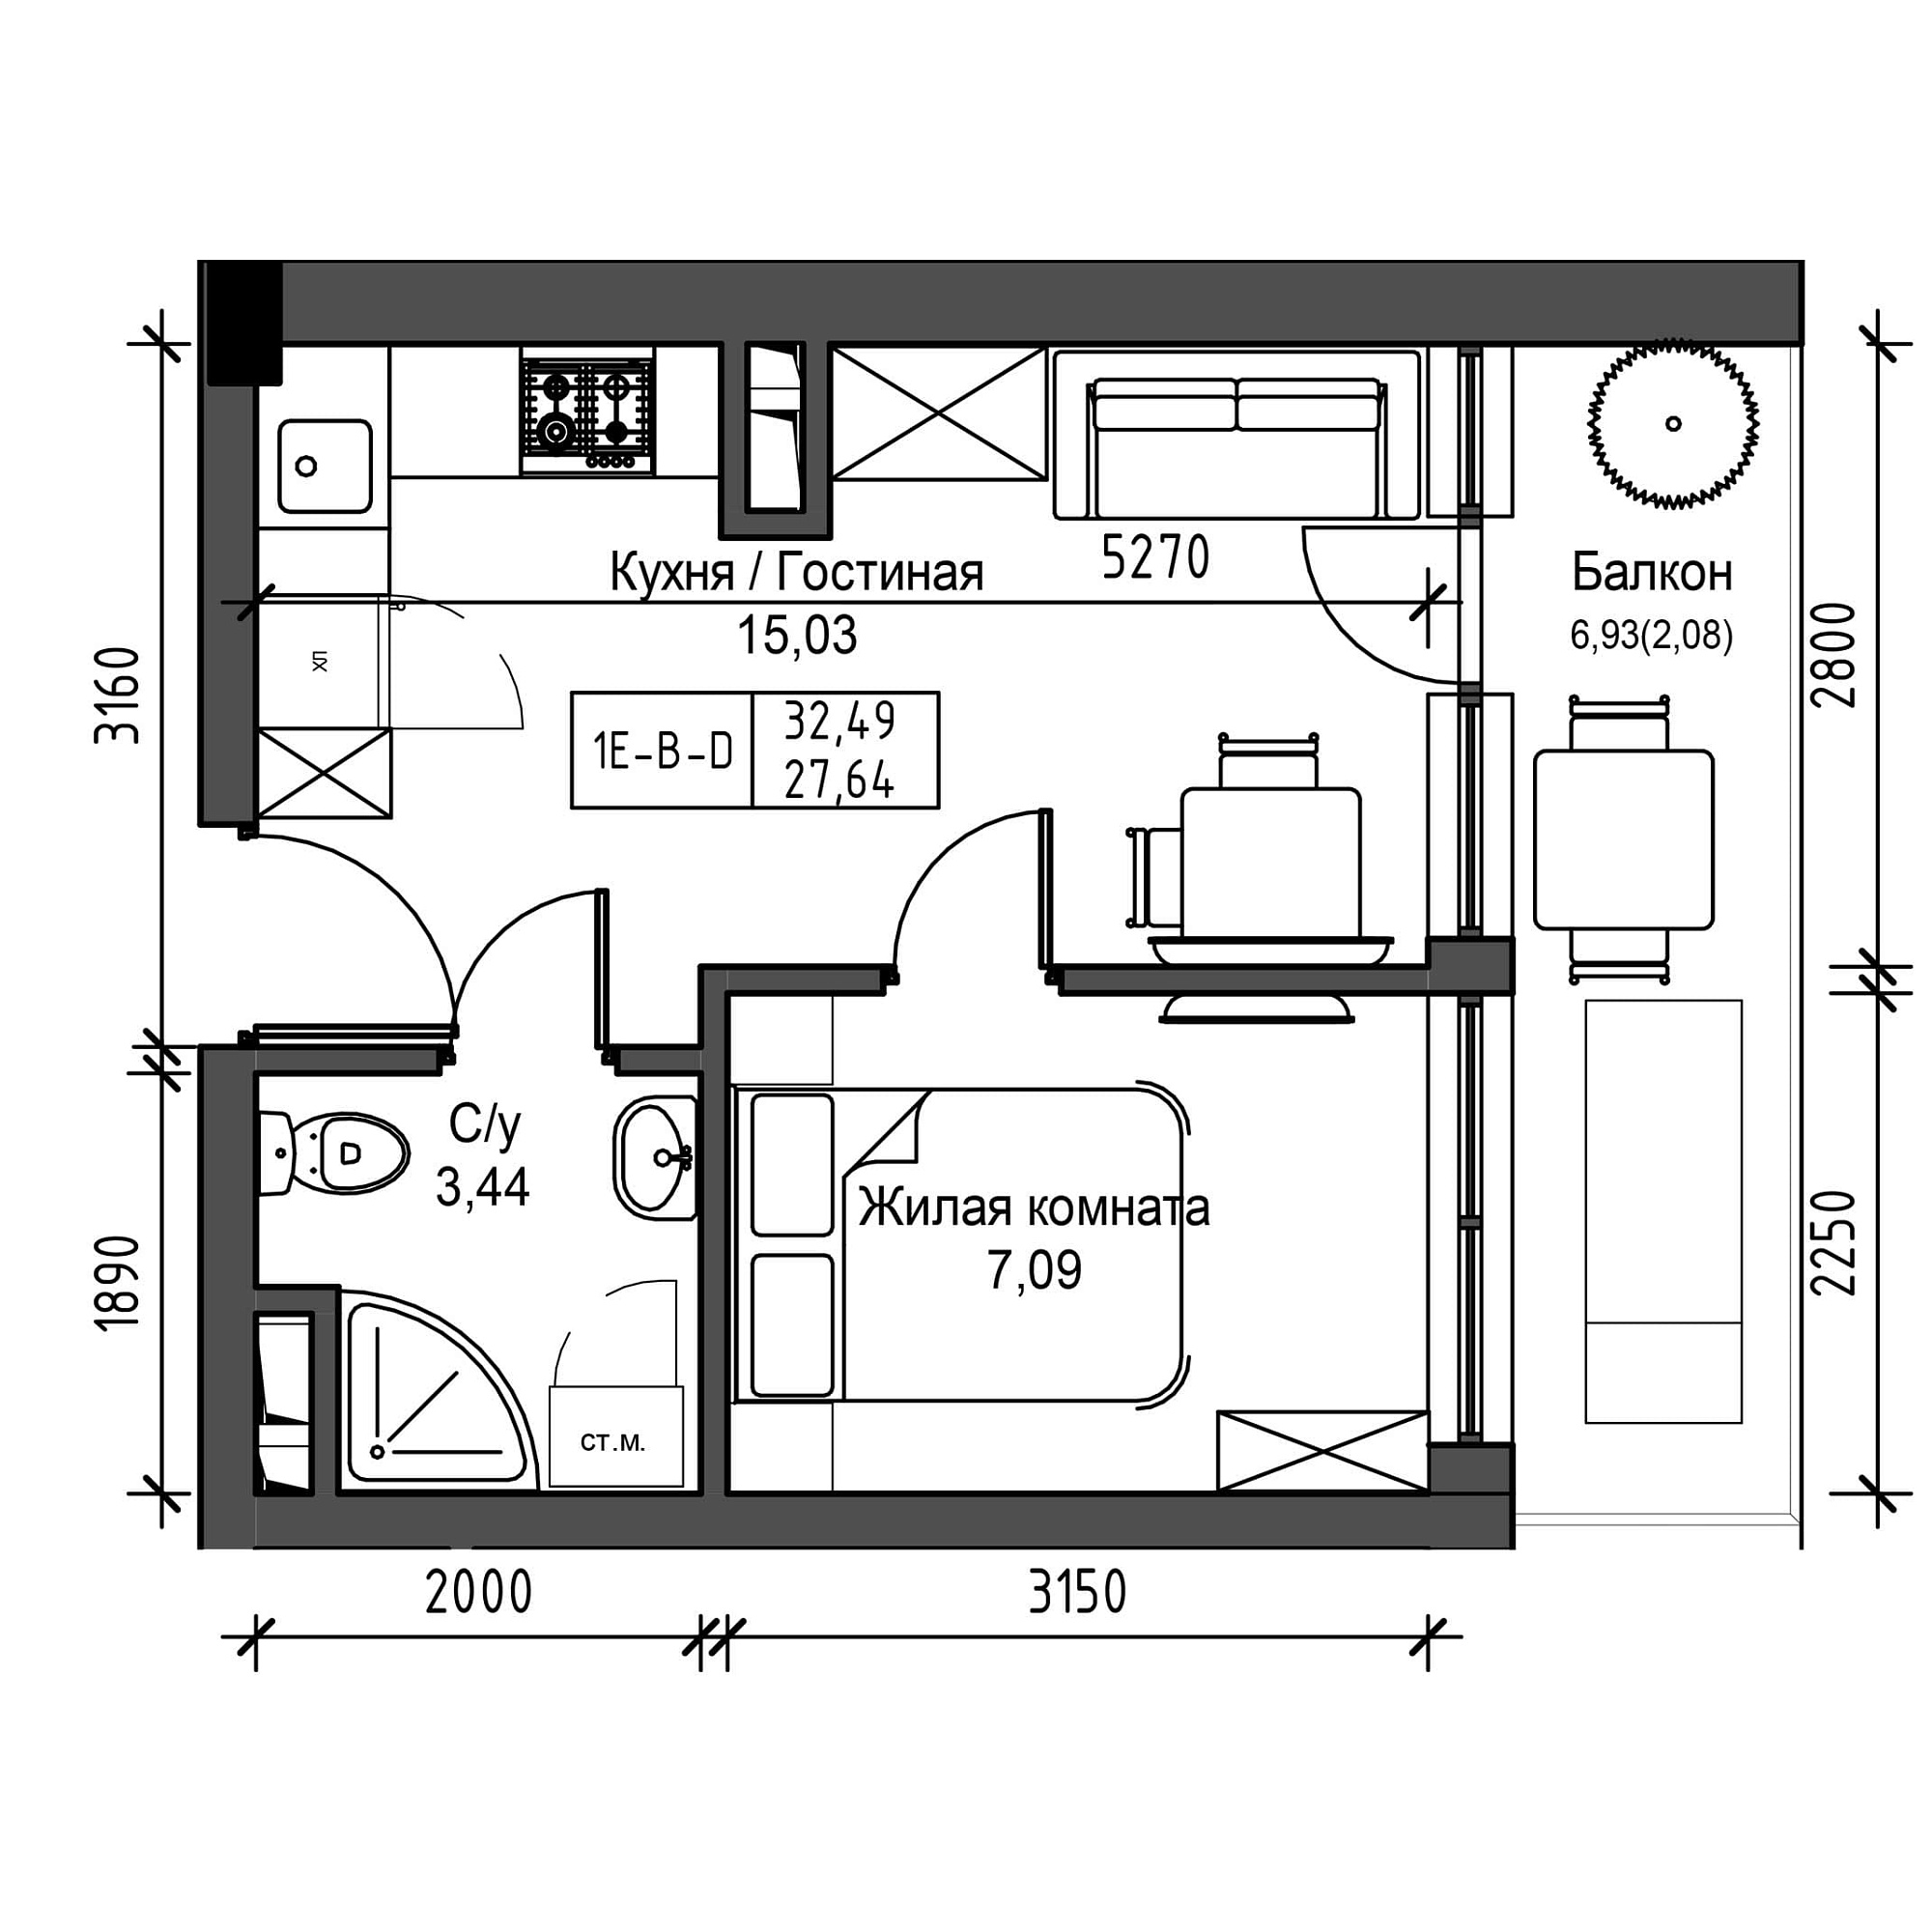 Планування 1-к квартира площею 27.64м2, UM-001-08/0001.